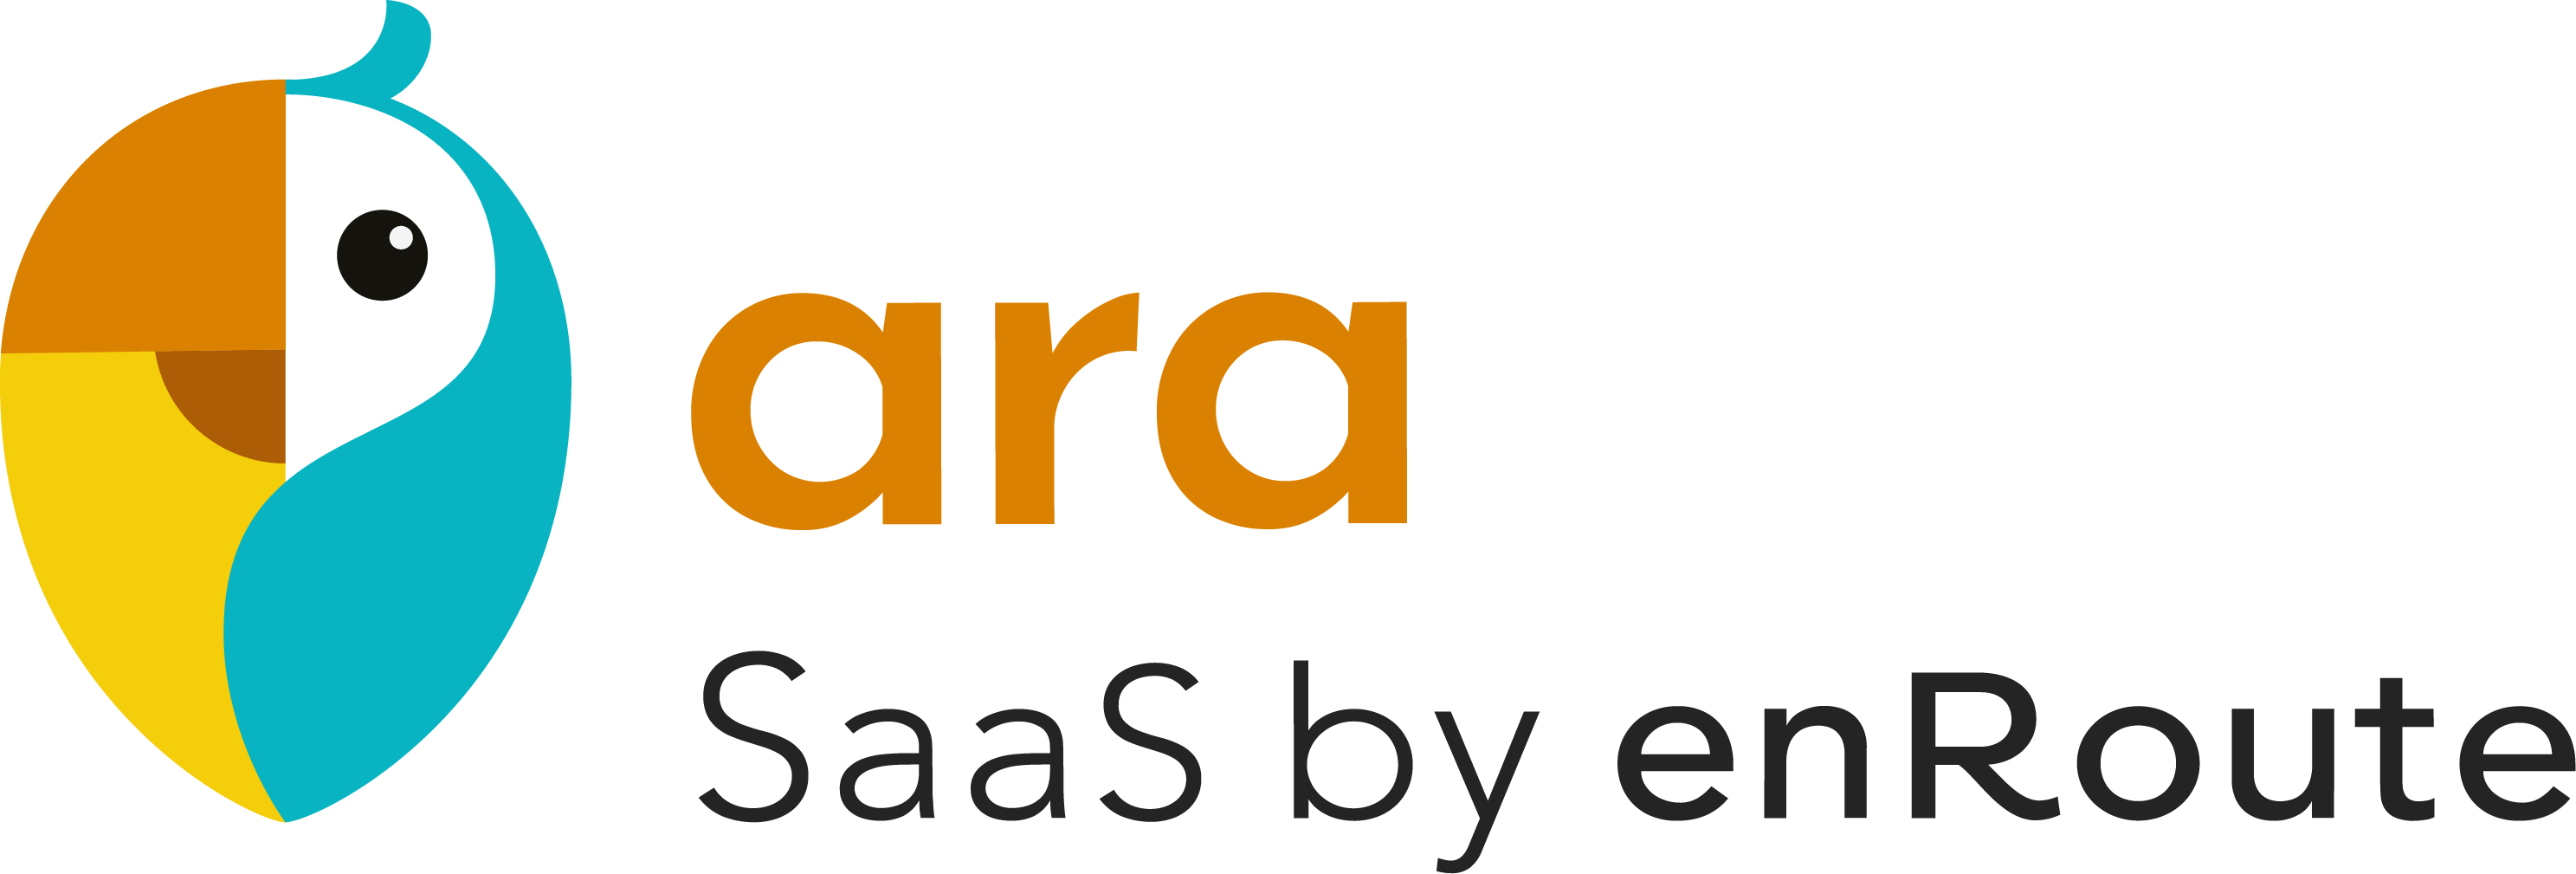 Logo-ara-2020-saas.png